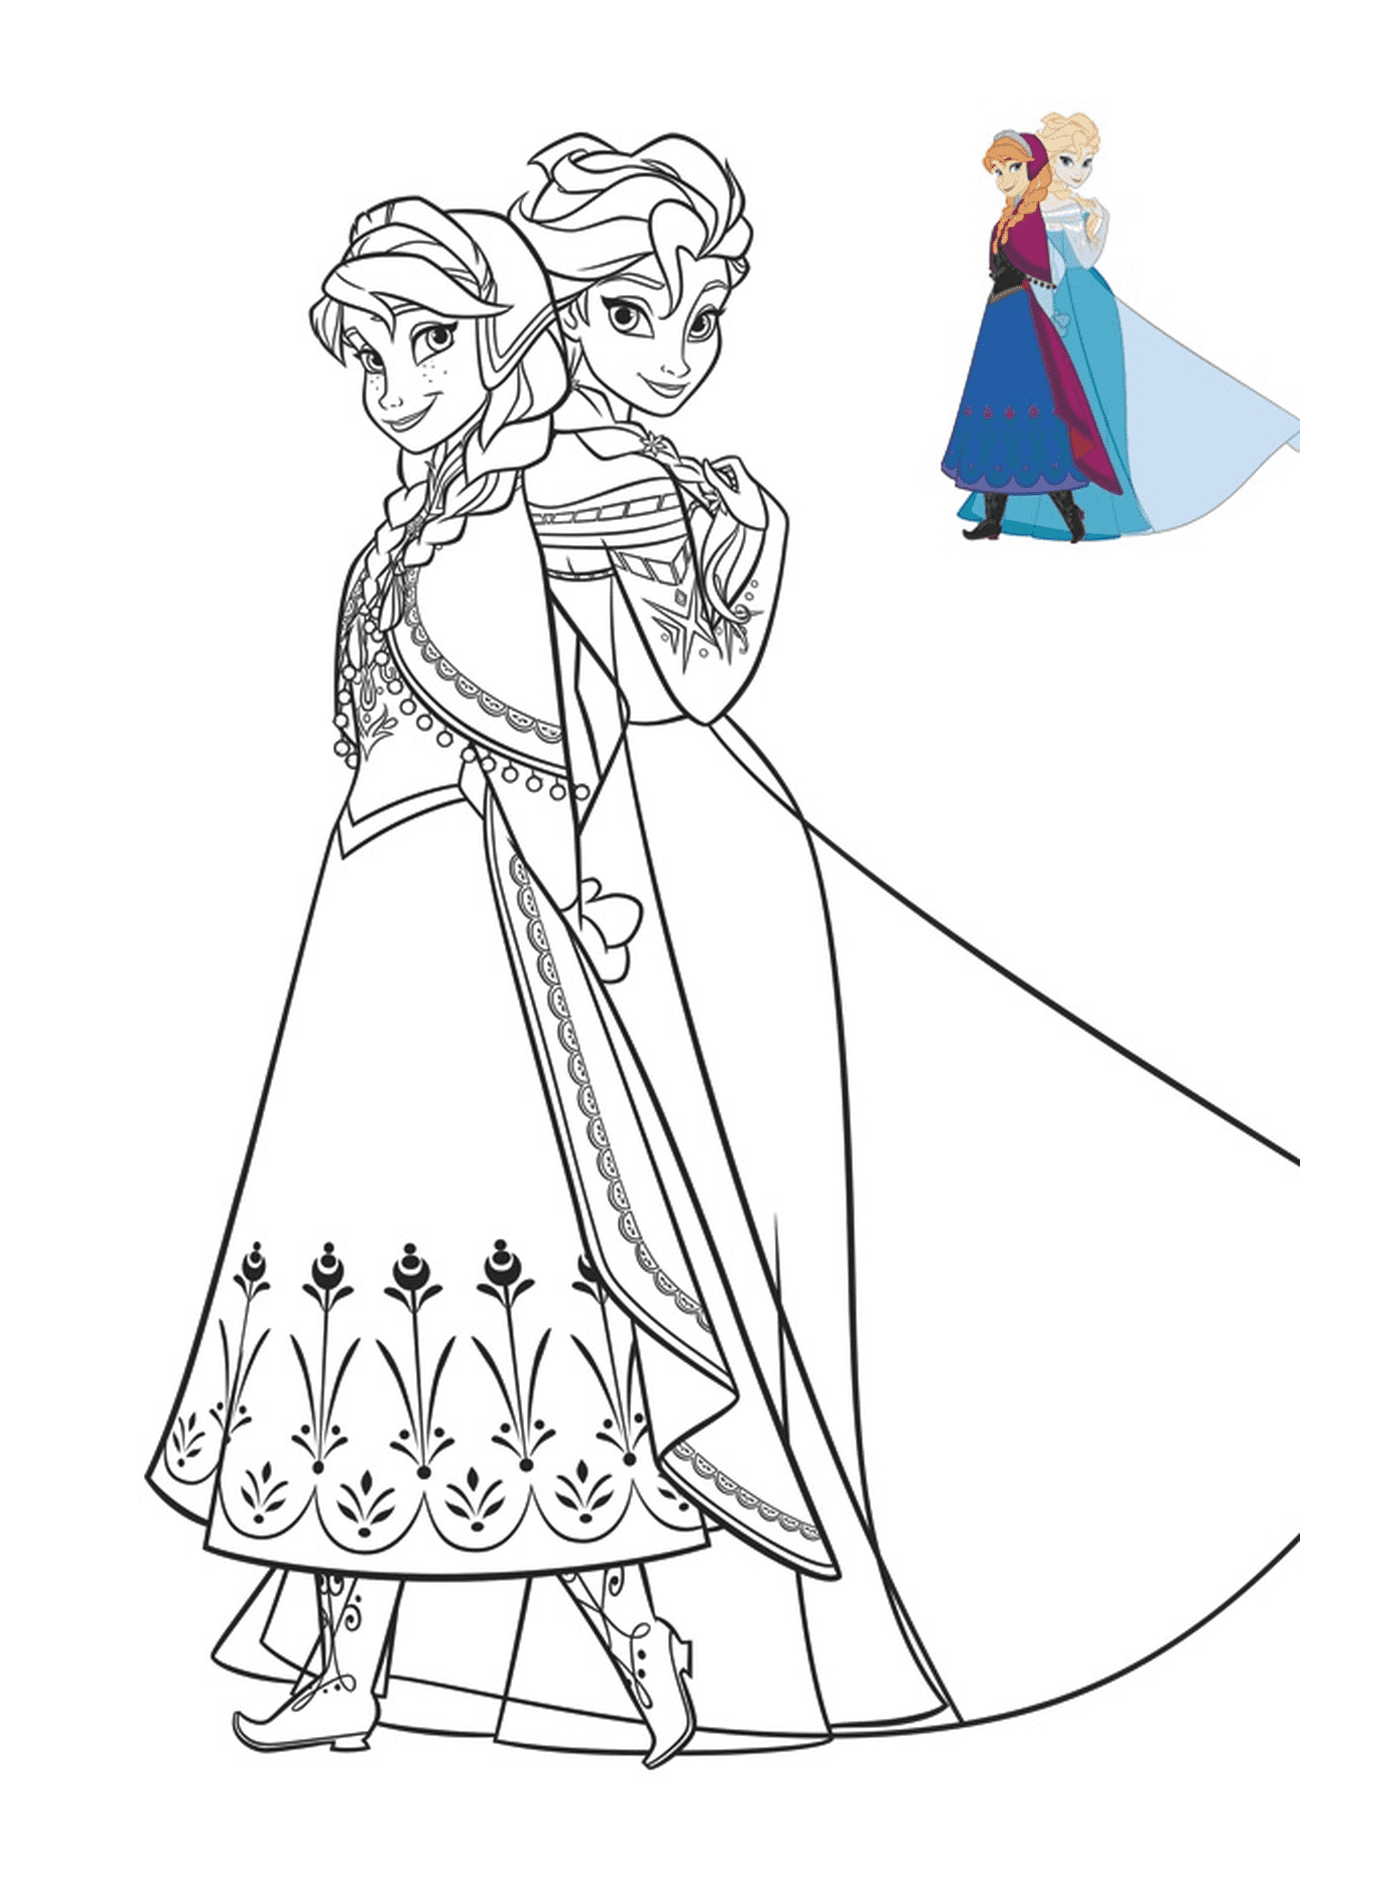  Anna and Elsa in beautiful dresses 